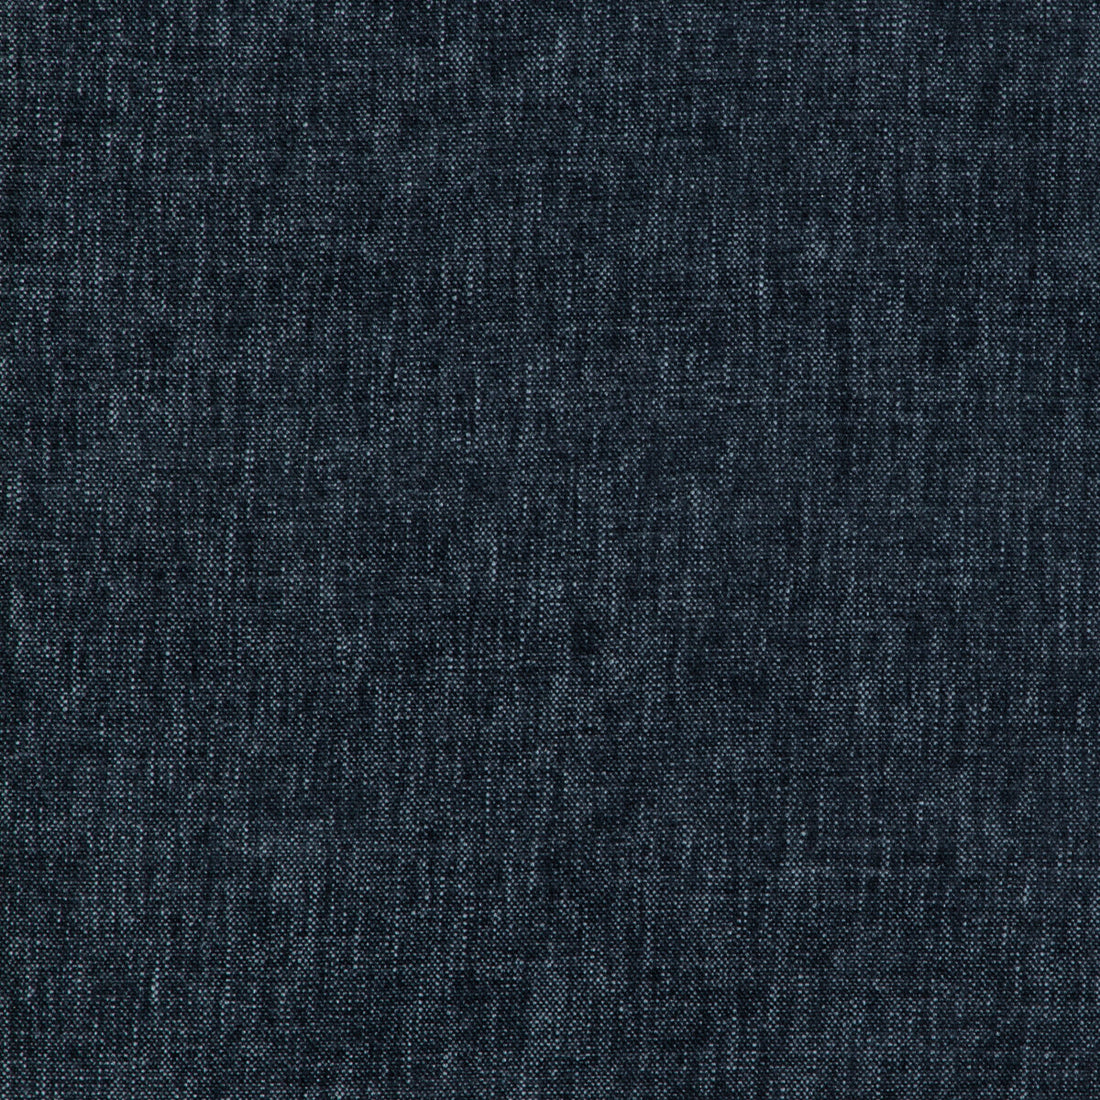 Kravet Smart fabric in 36663-50 color - pattern 36663.50.0 - by Kravet Smart in the Performance Kravetarmor collection